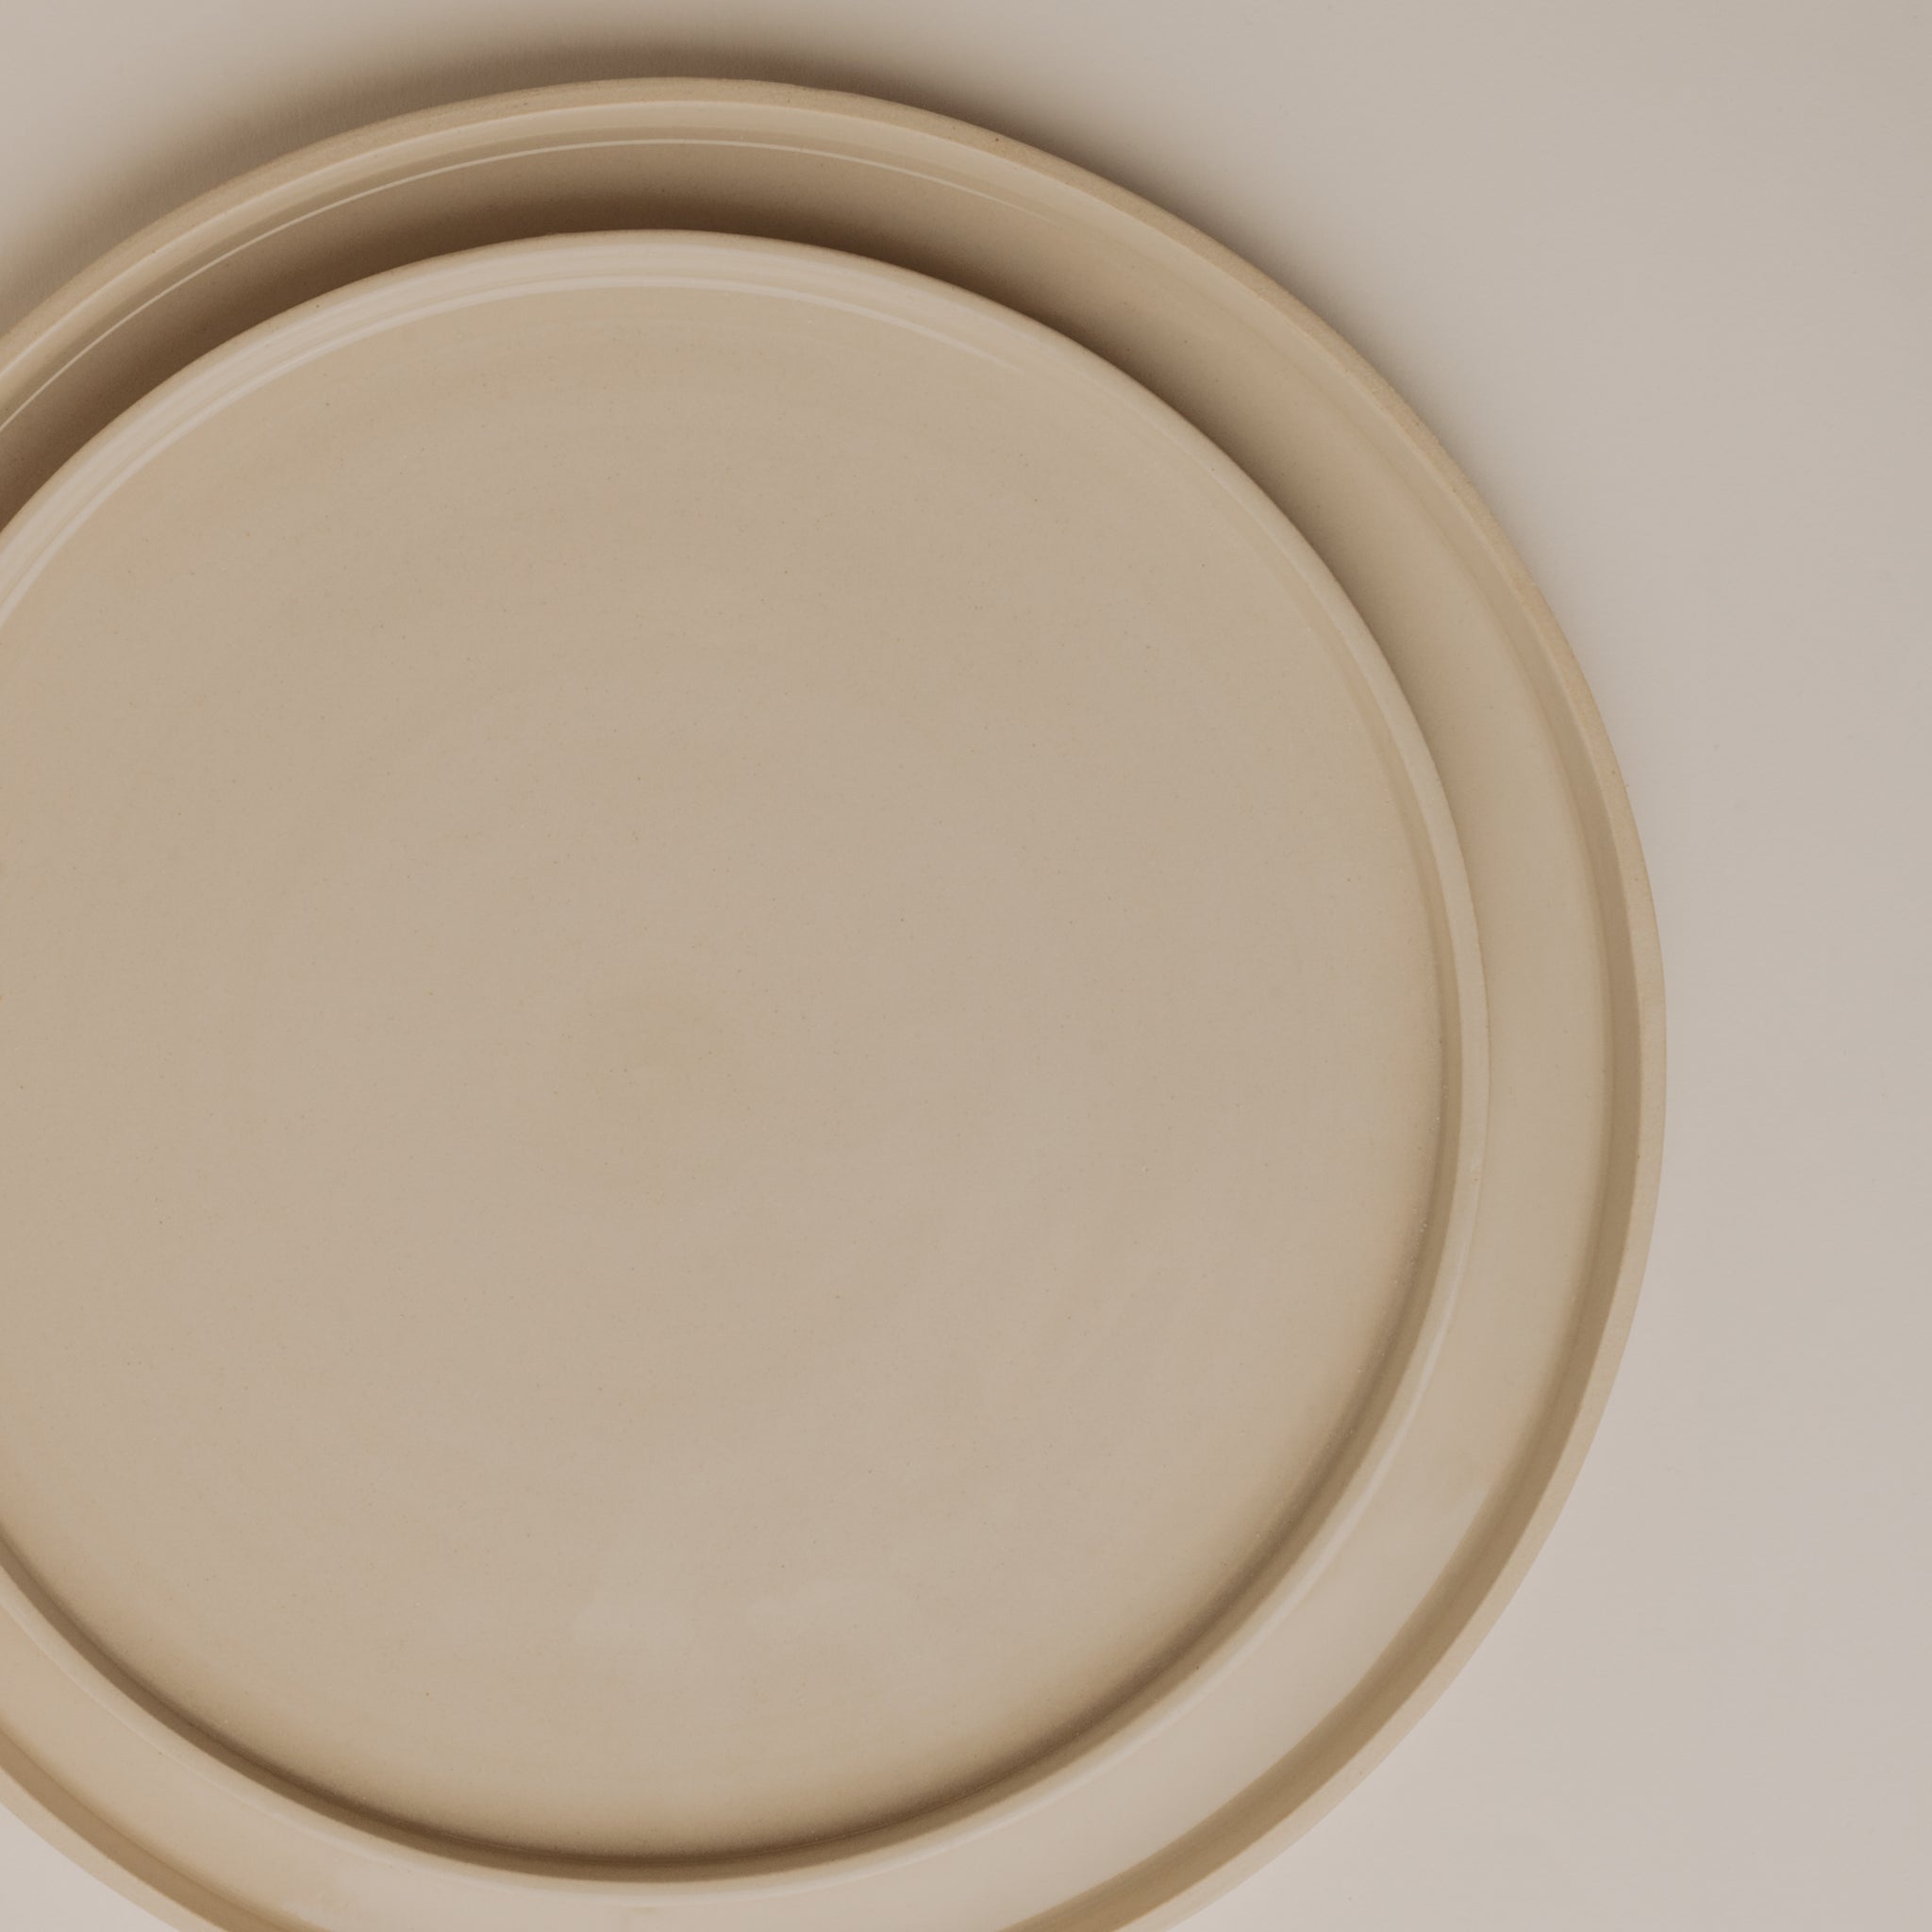 handmade ceramic plates for breakfast and dinner clai studio ceramic atelier Berlin Prenzlauer Berg pottery studio